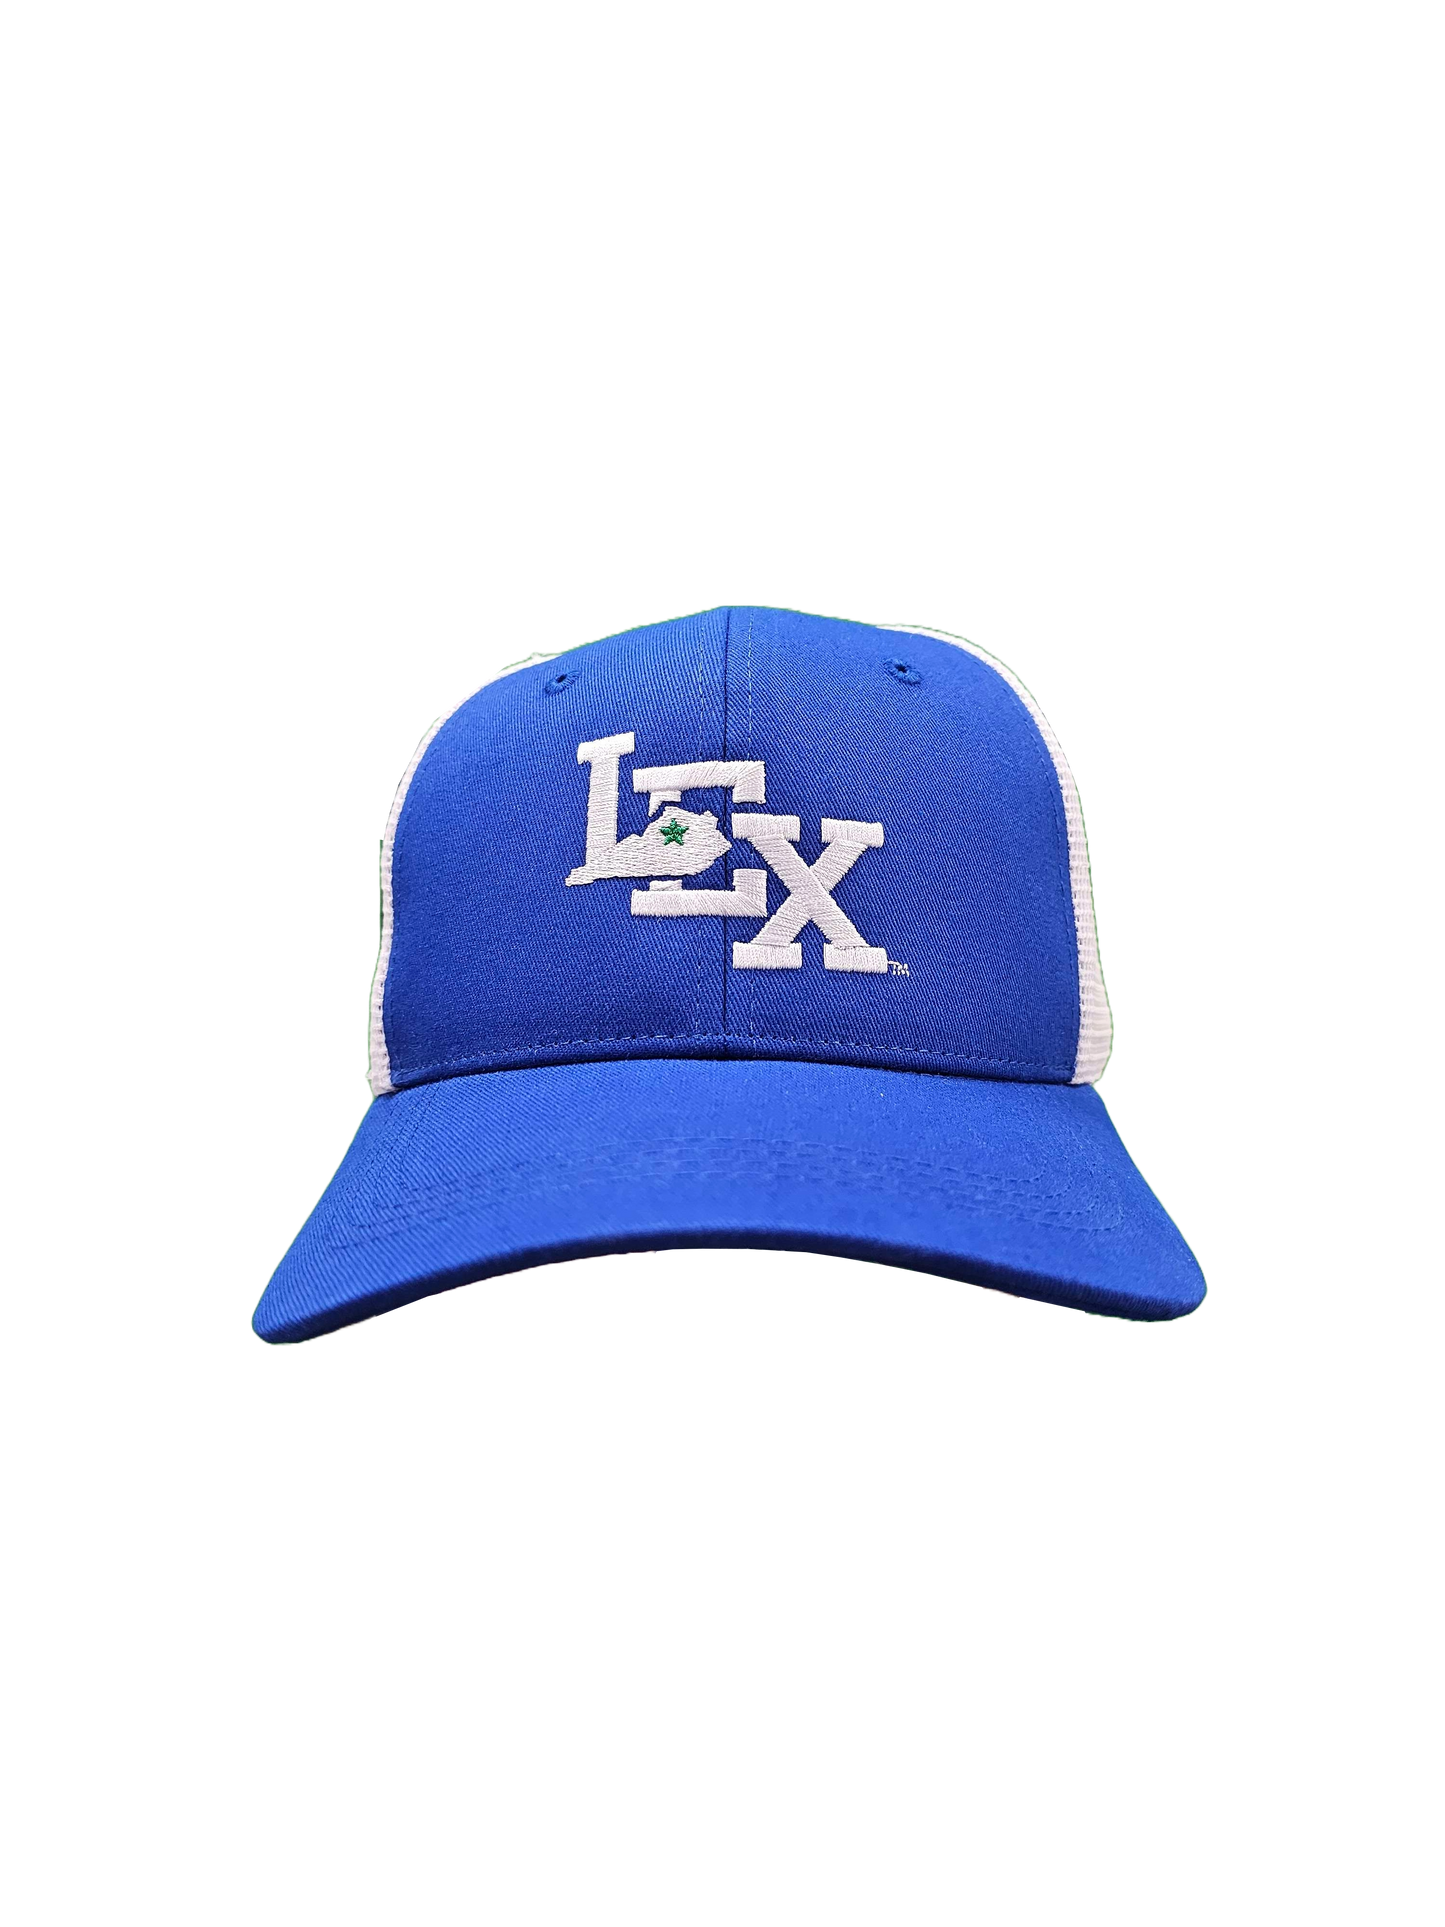 LEX Trucker Hat - Blue